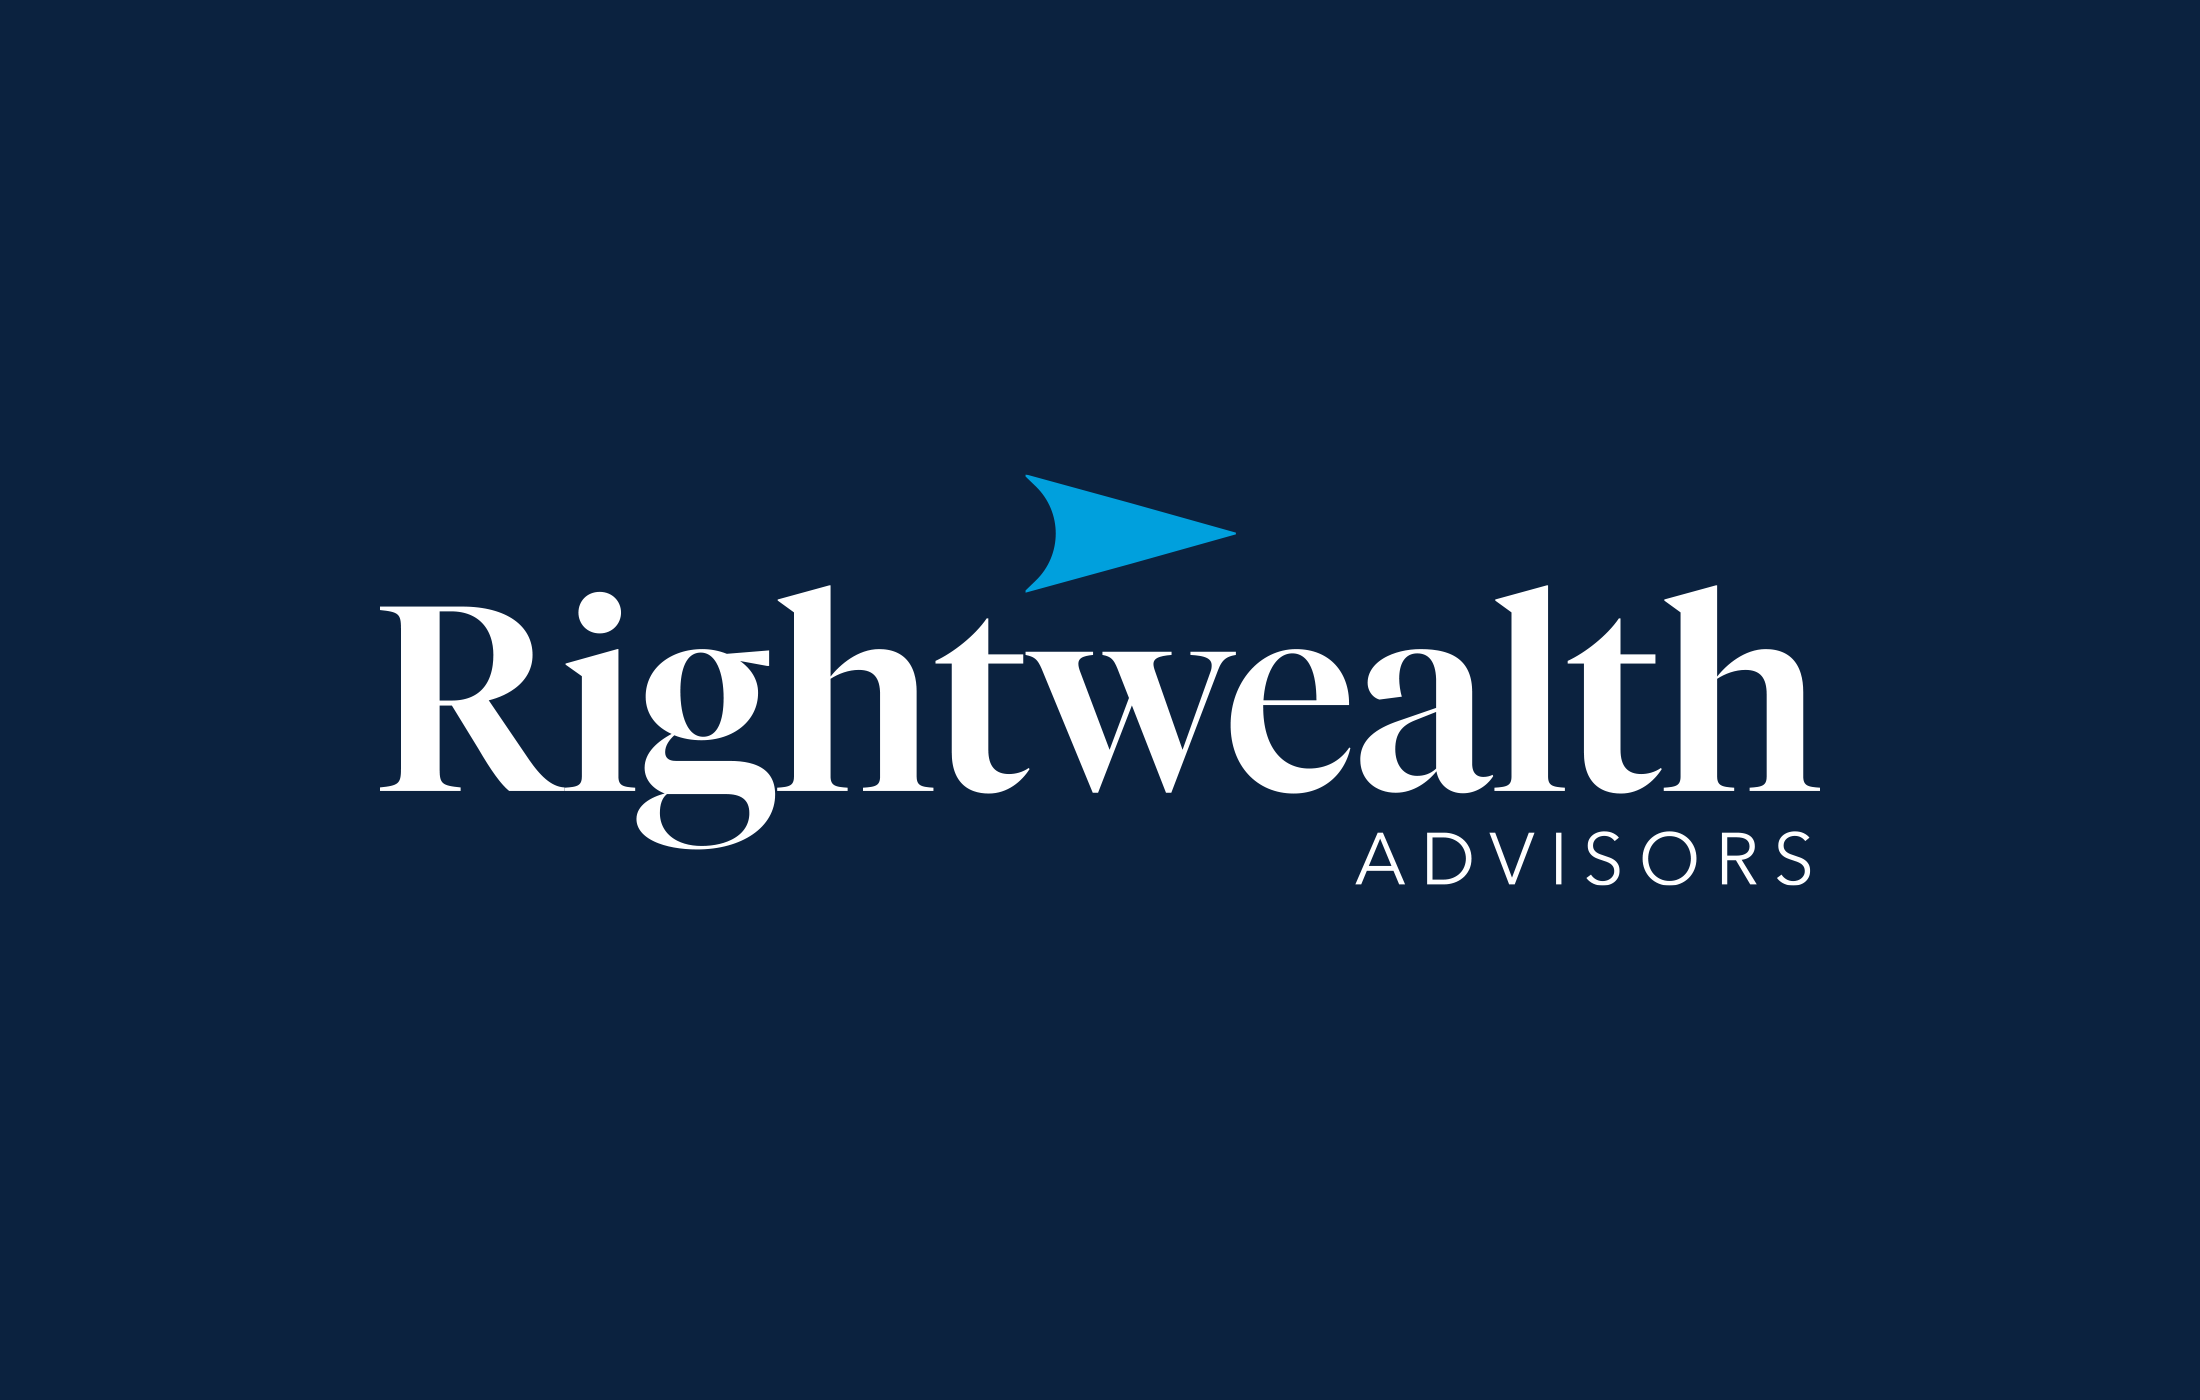 Rightwealth Advisors logo on navy background